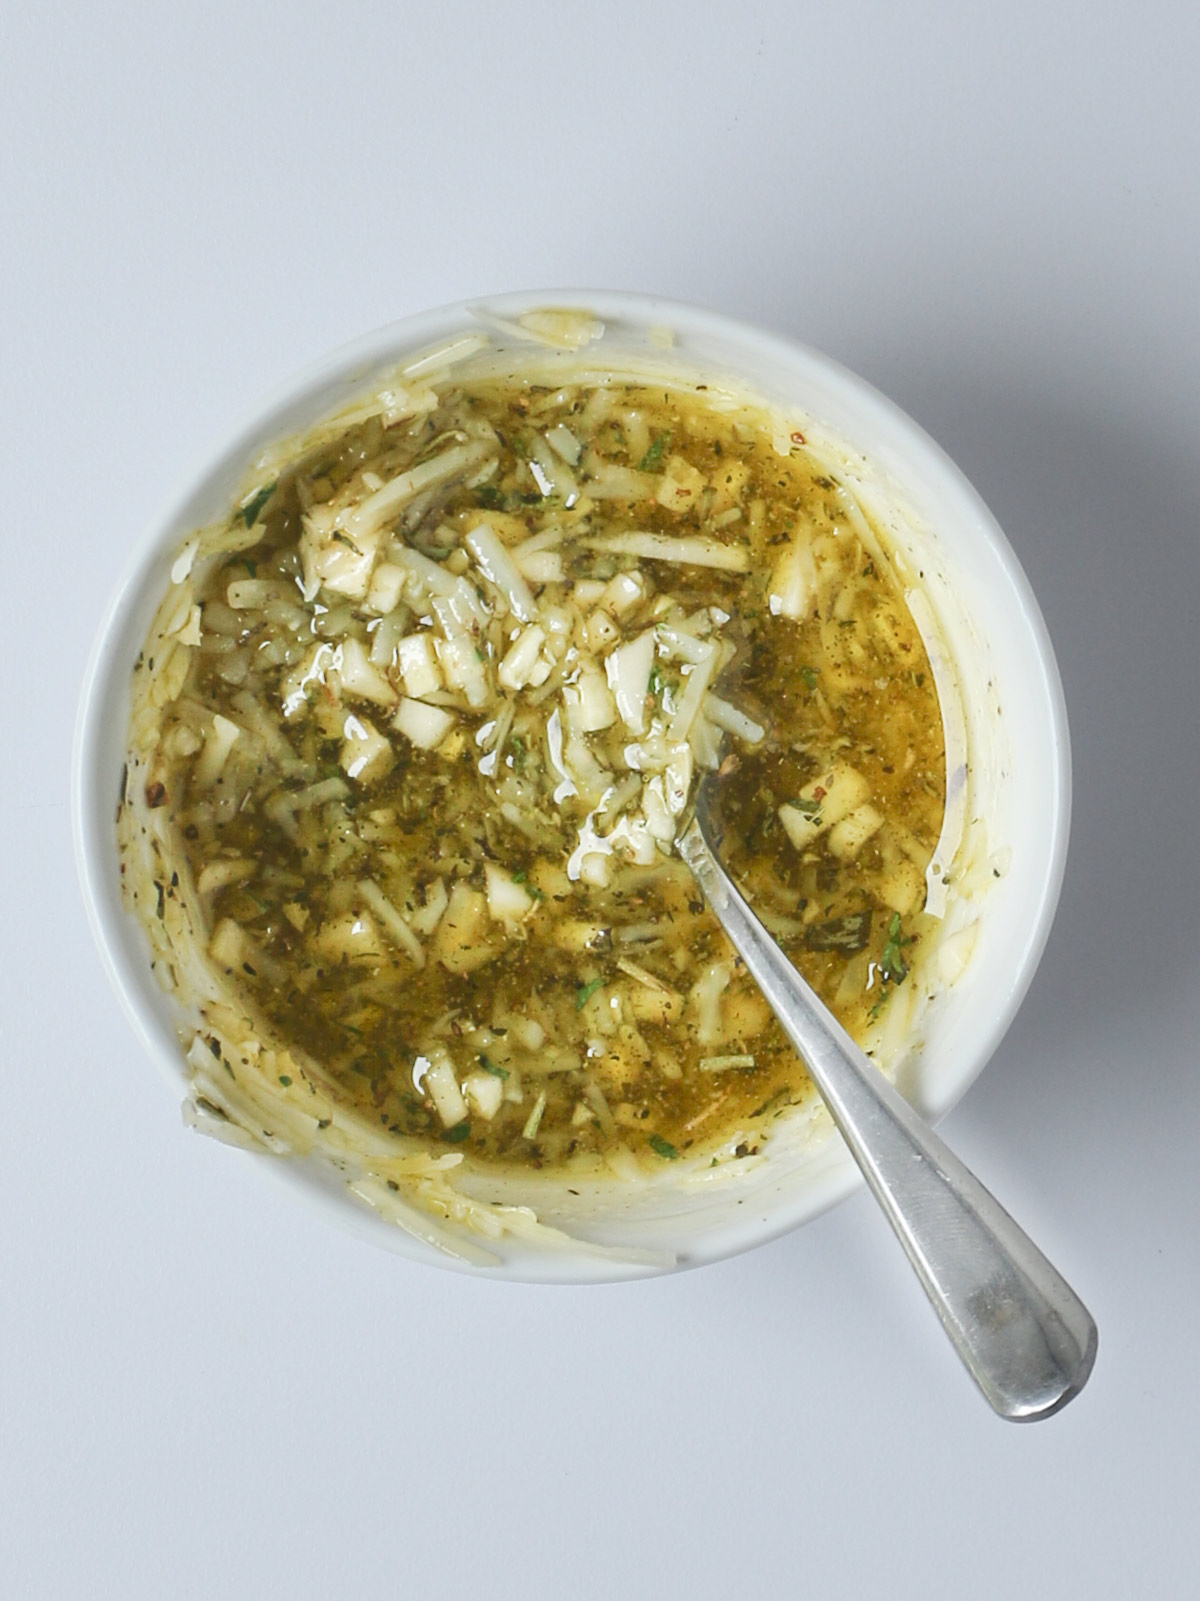 prepared garlic sauce in white bowl.